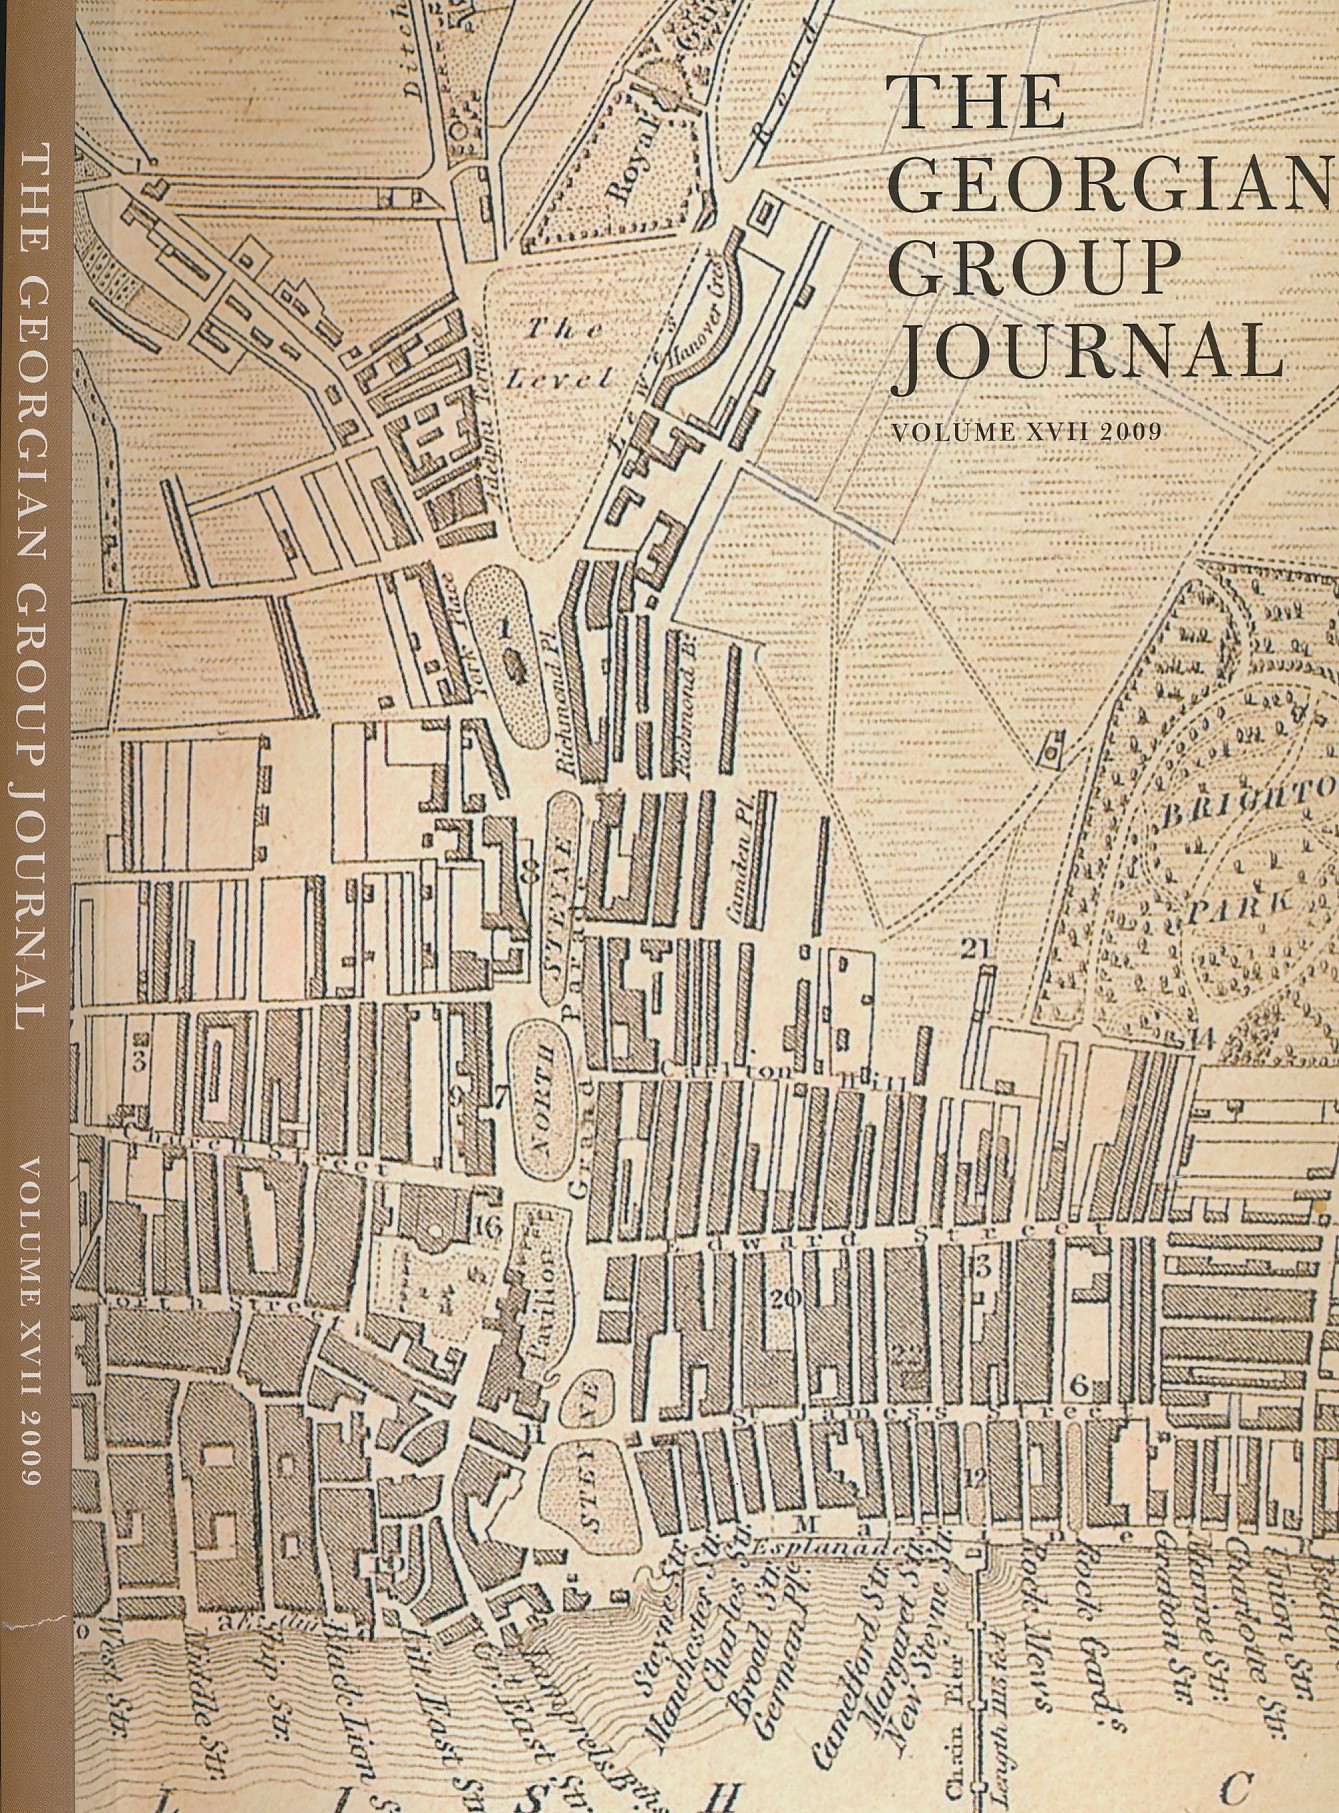 The Georgian Group Journal. Volume XVII. 2009